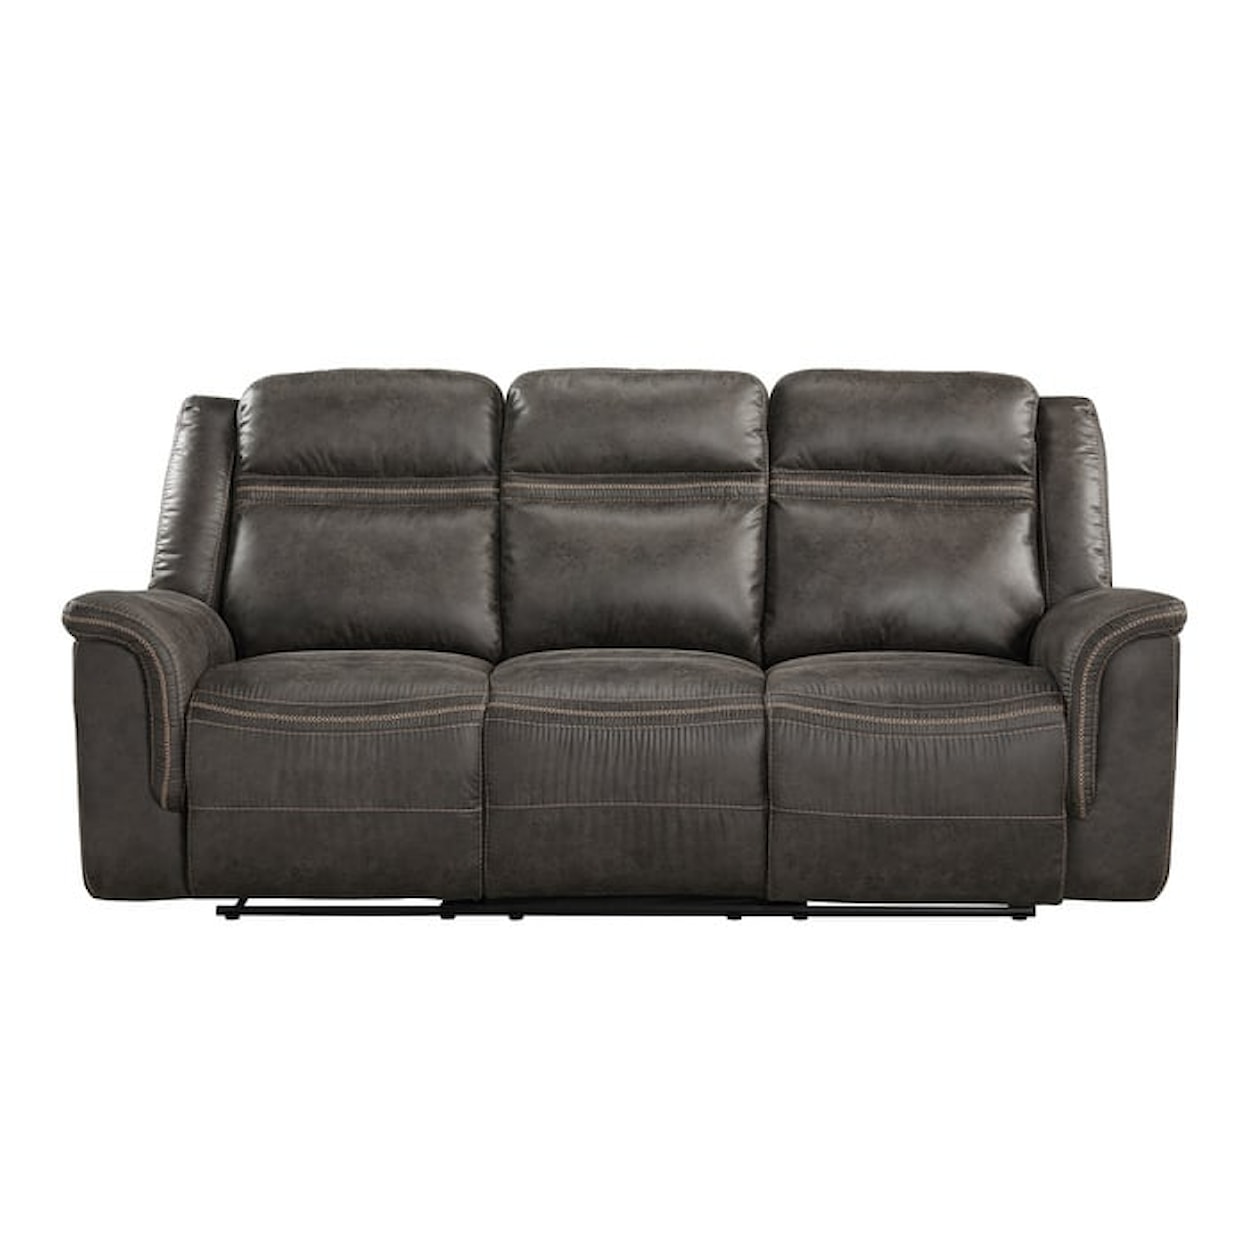 Homelegance Boise Dual Reclining Sofa